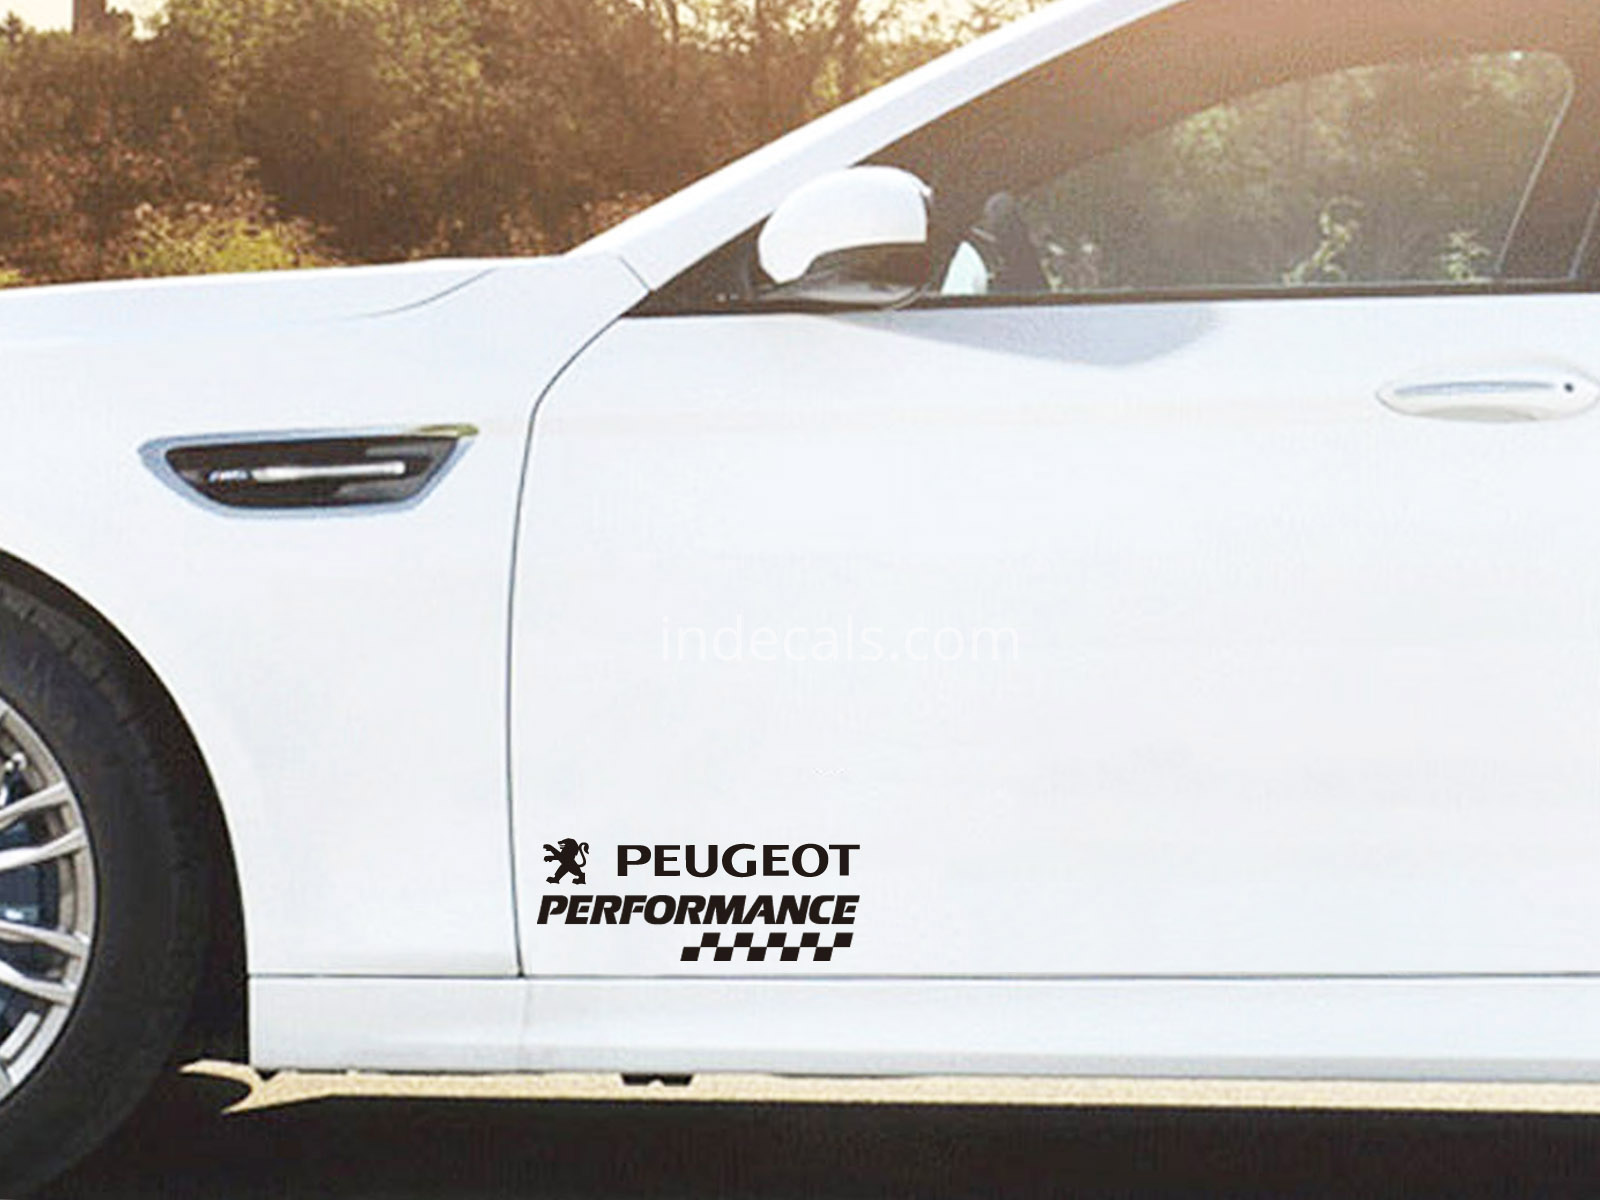 2 x Peugeot Performance Stickers for Doors - Black